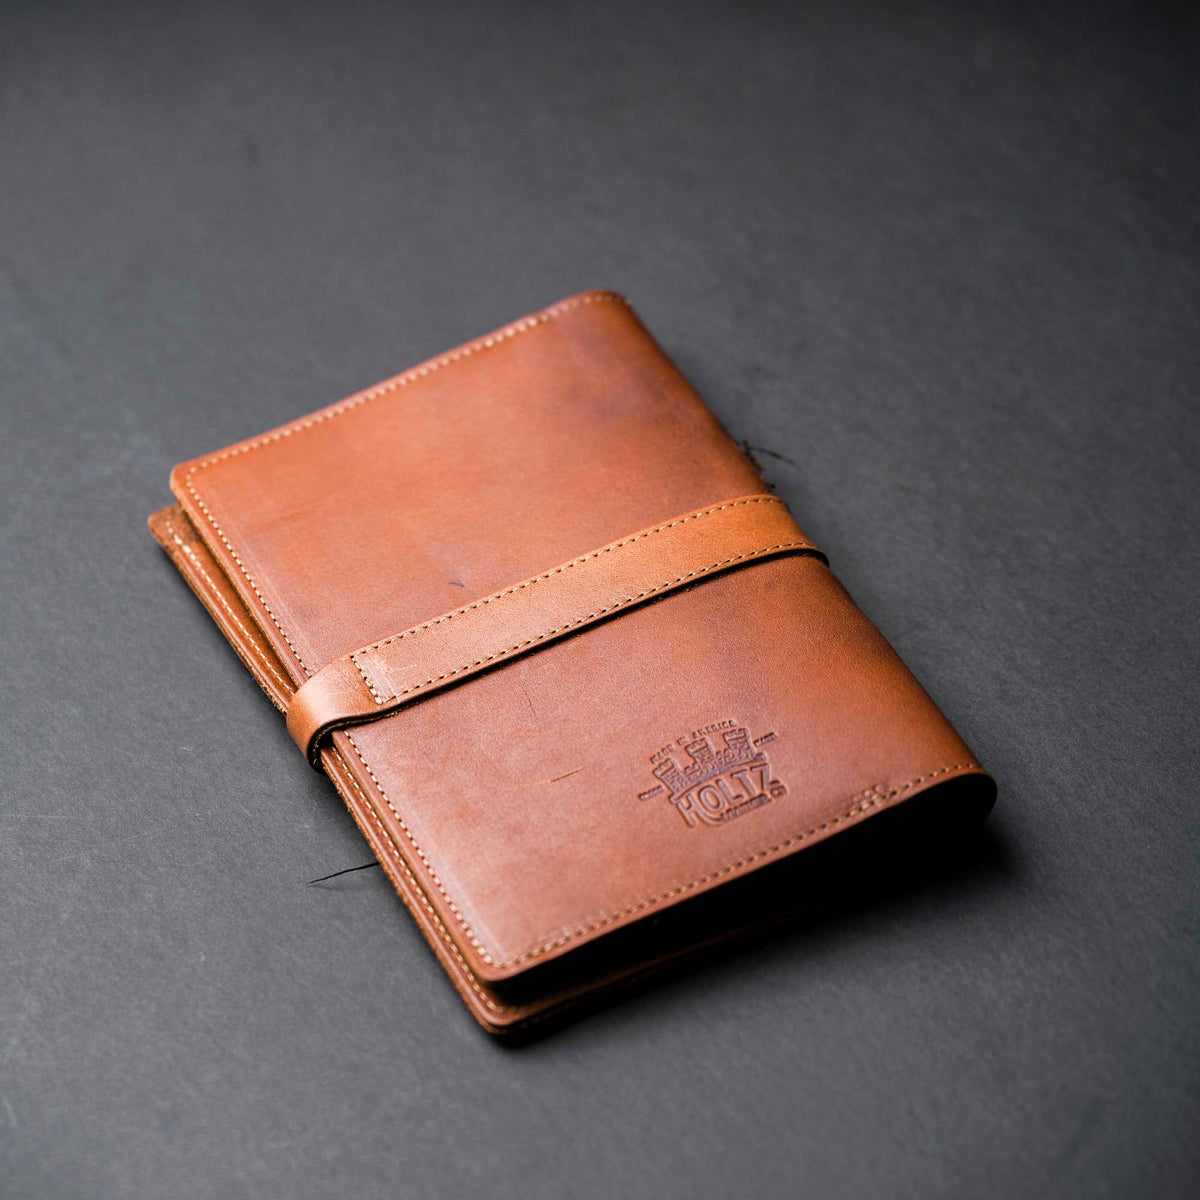 Branded Unique Inventor Journal - 604